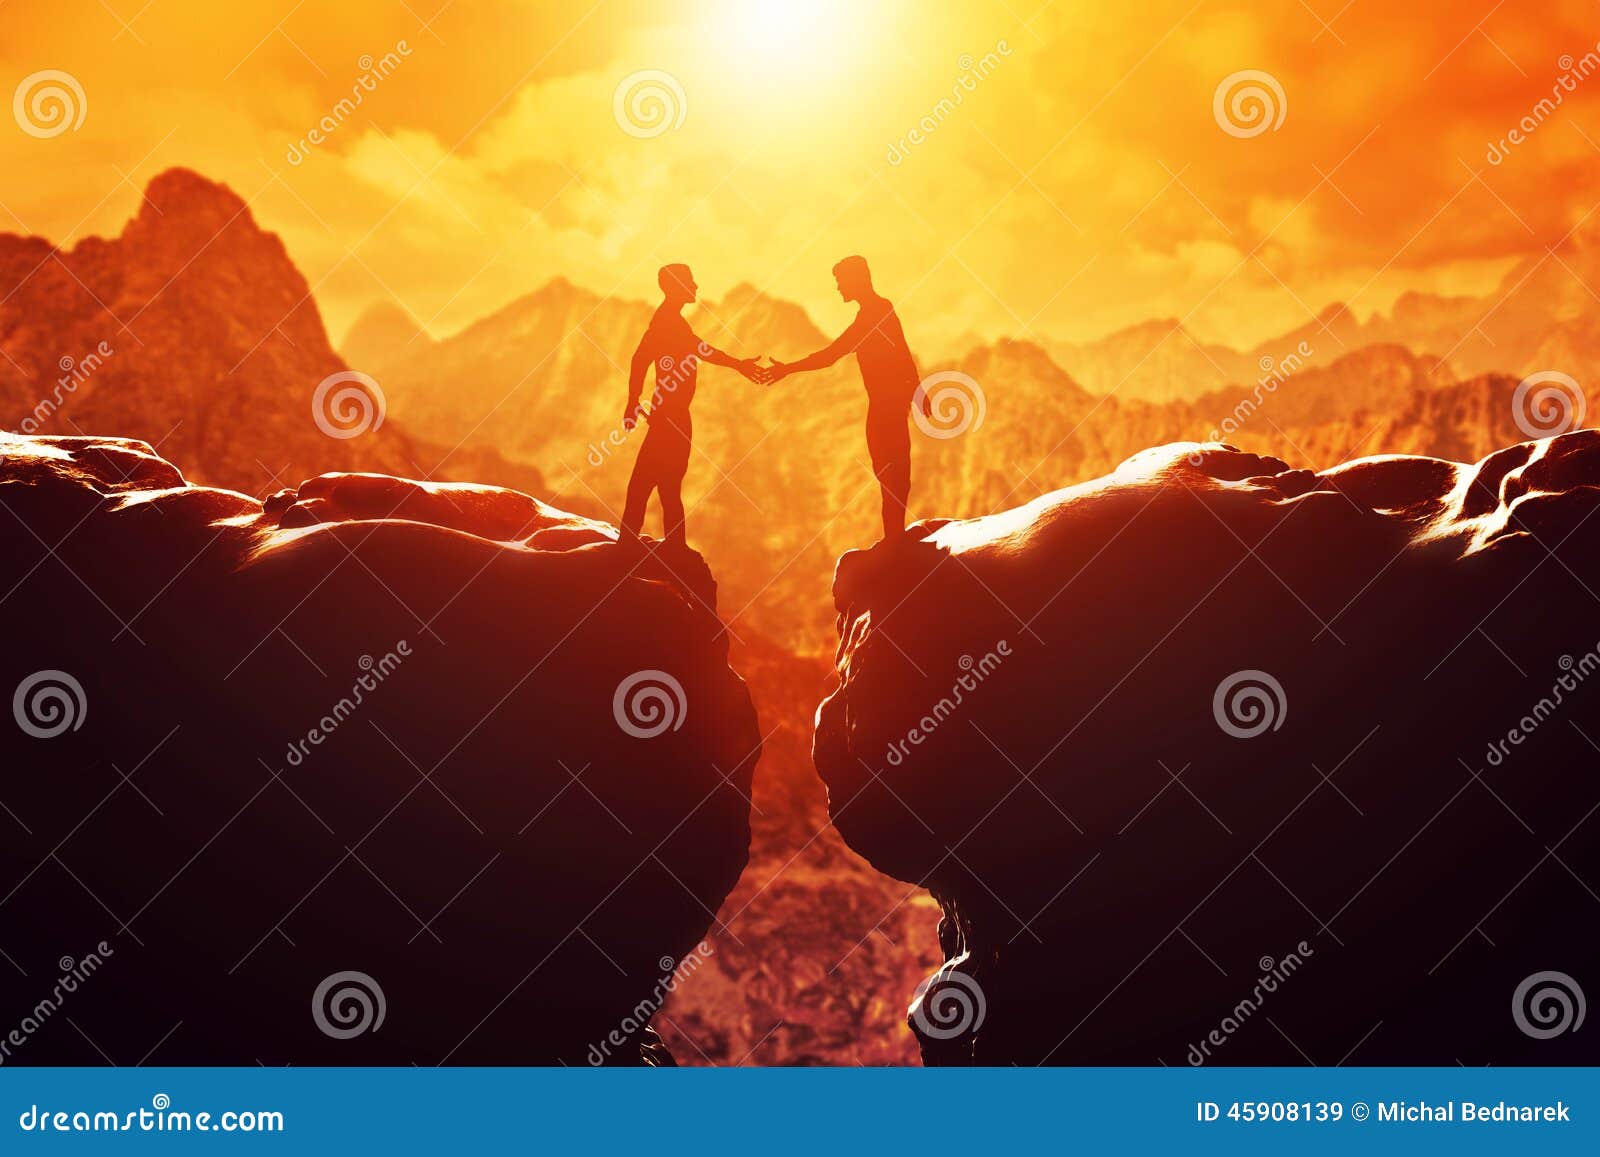 two men shake hands over precipice. business handshake